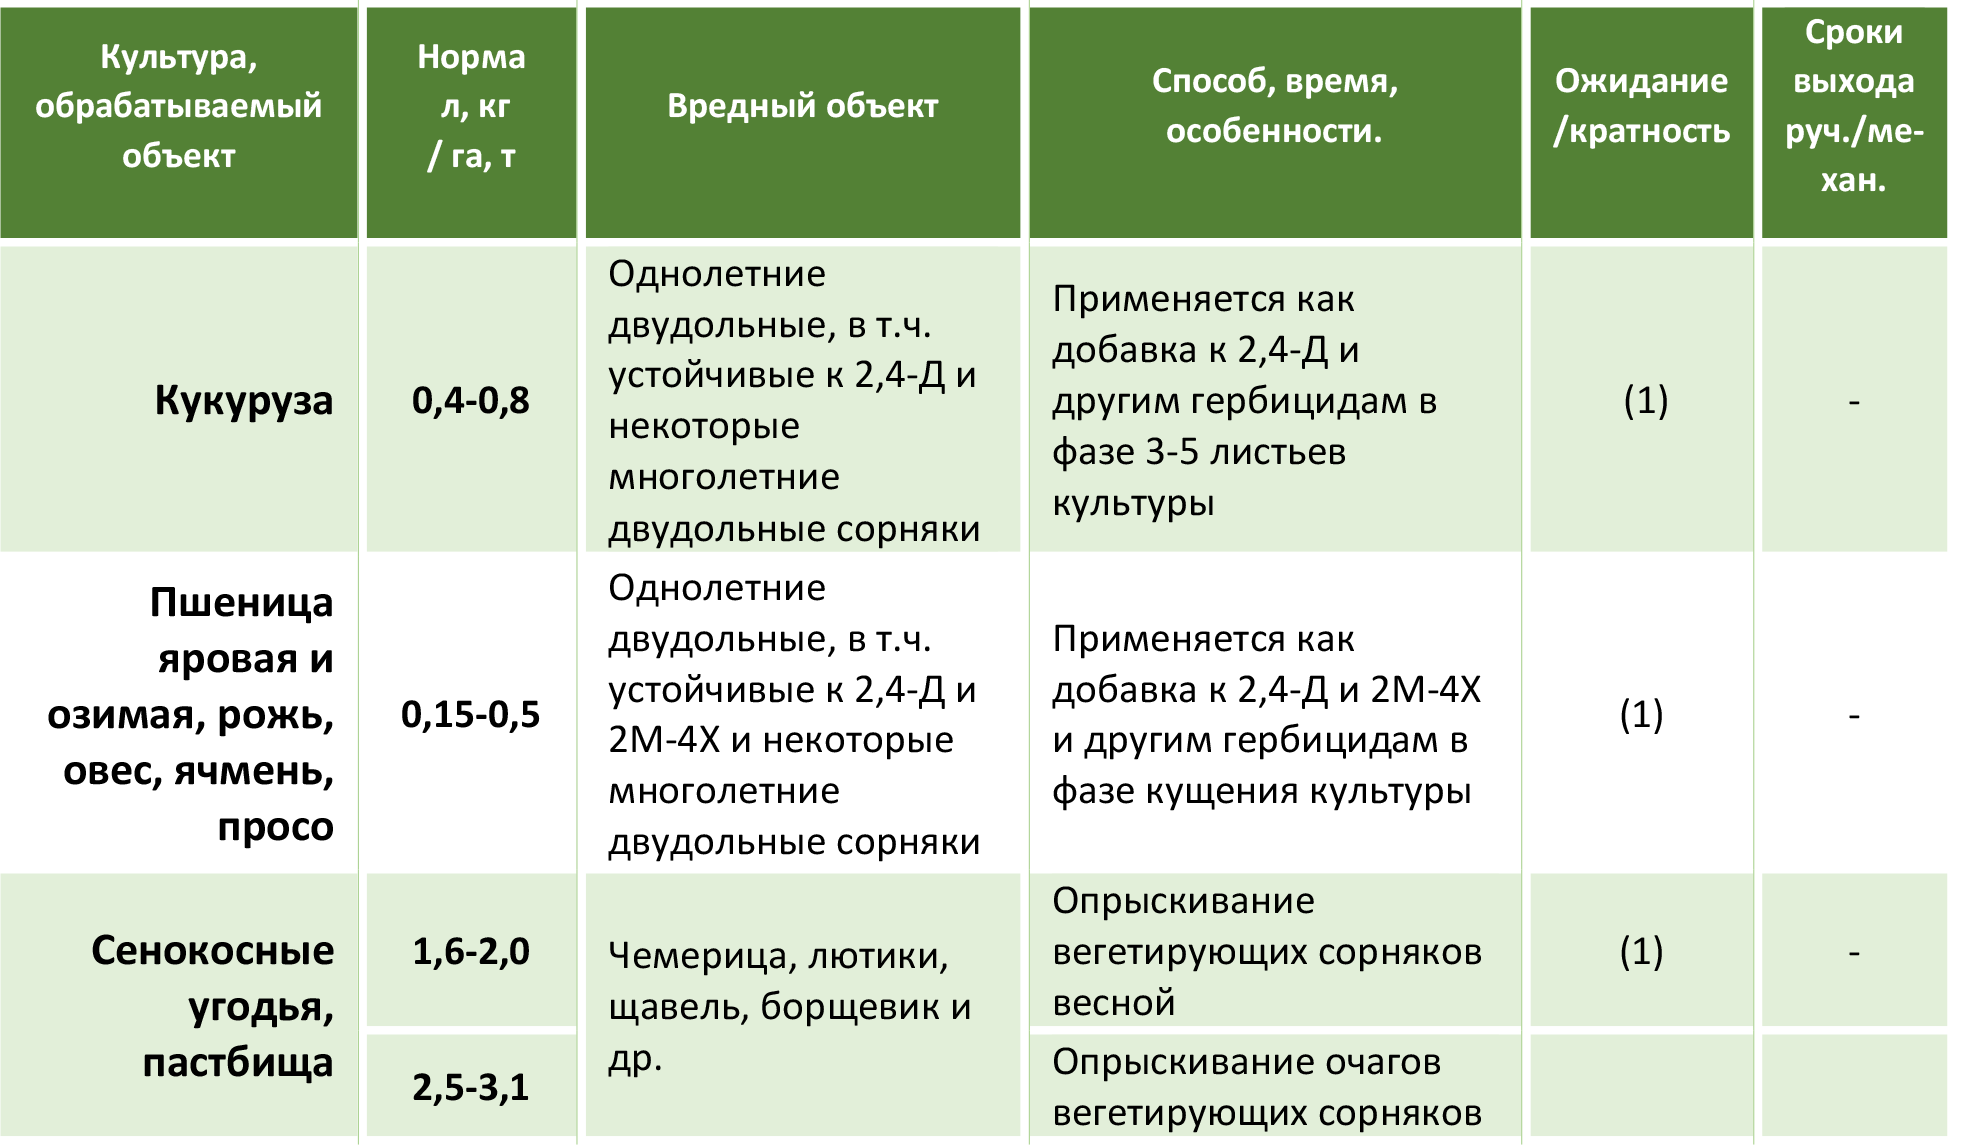 Тиаметоксам (актара) | справочник пестициды.ru